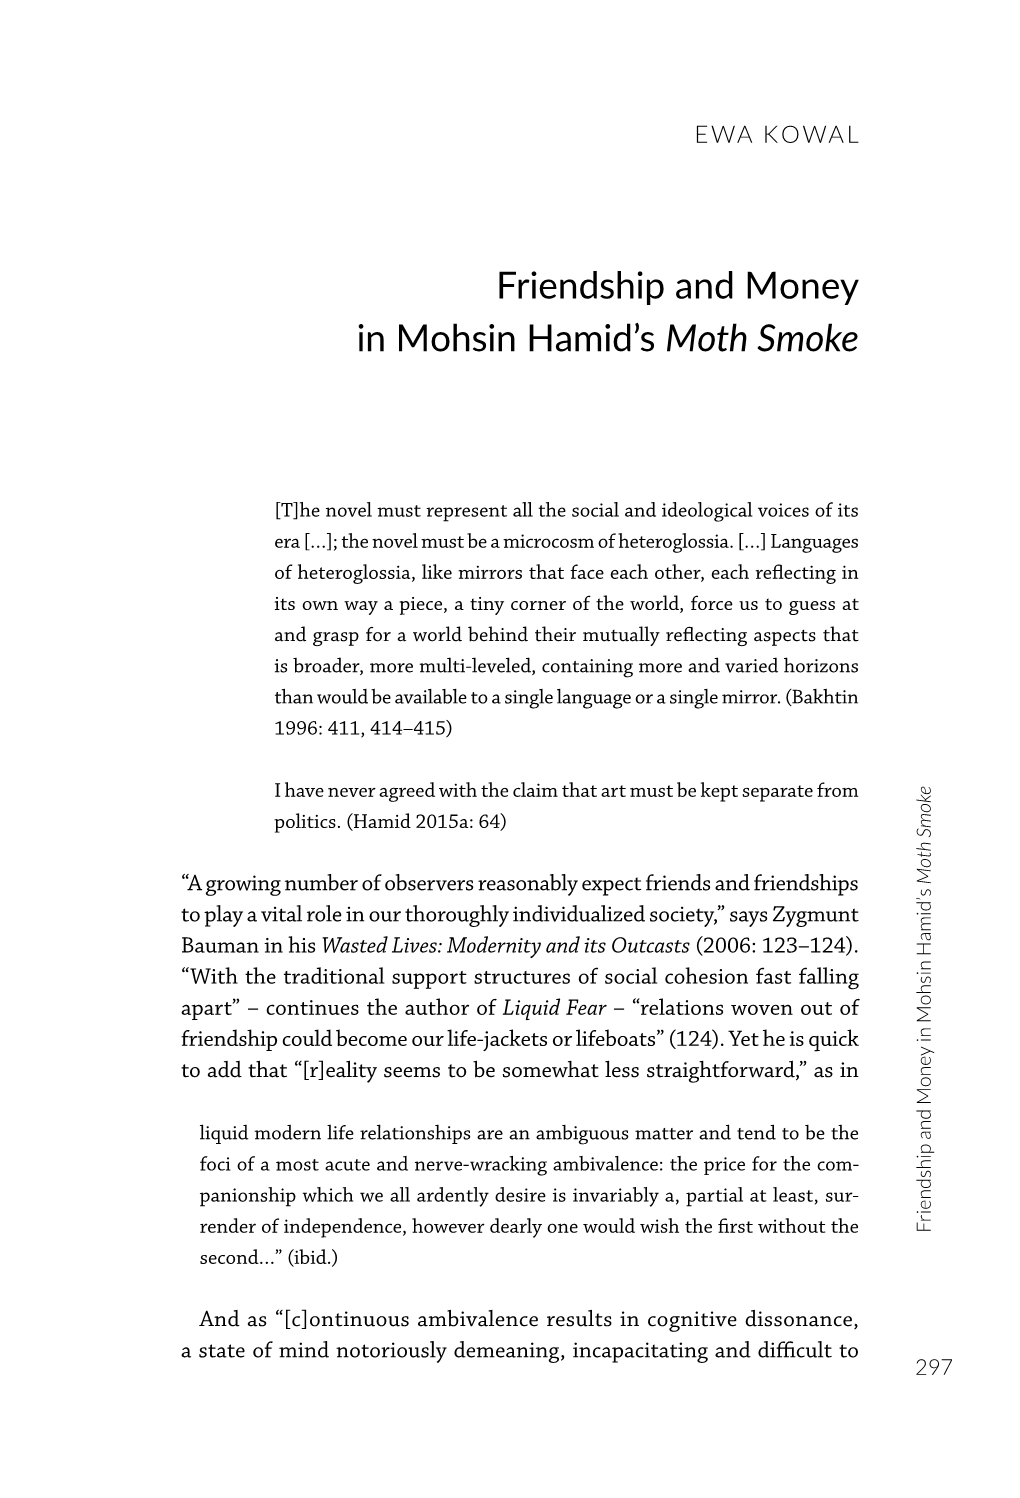 Friendship and Money in Mohsin Hamid's Moth Smoke